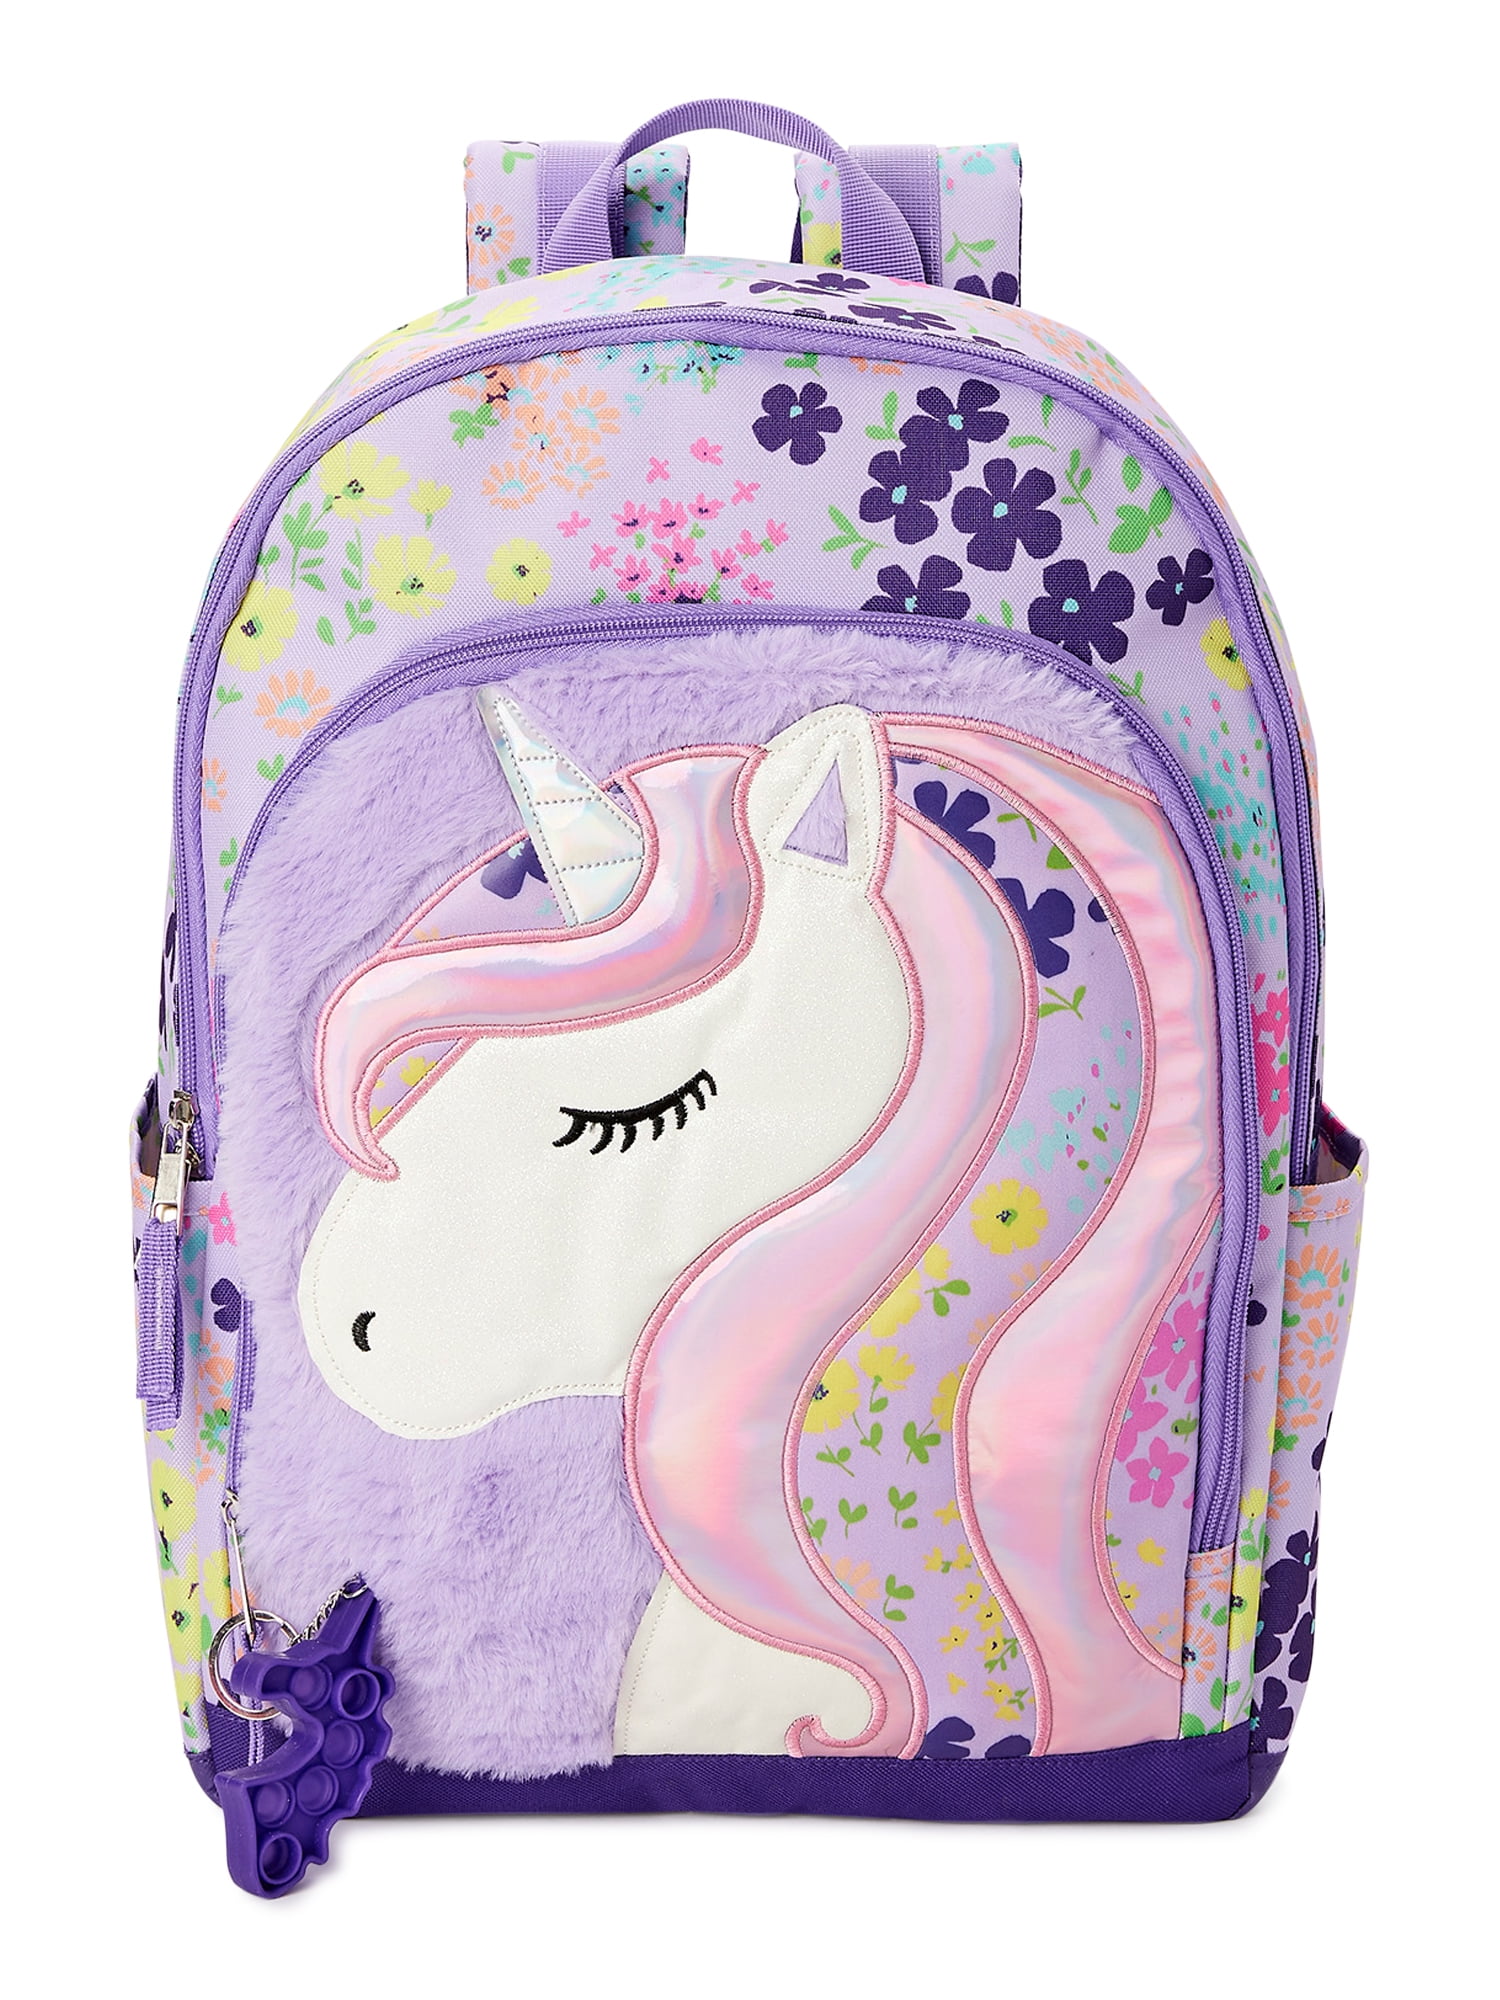 Wonder Nation Girls' Flower Unicorn Backpack - Purple - 1 Each